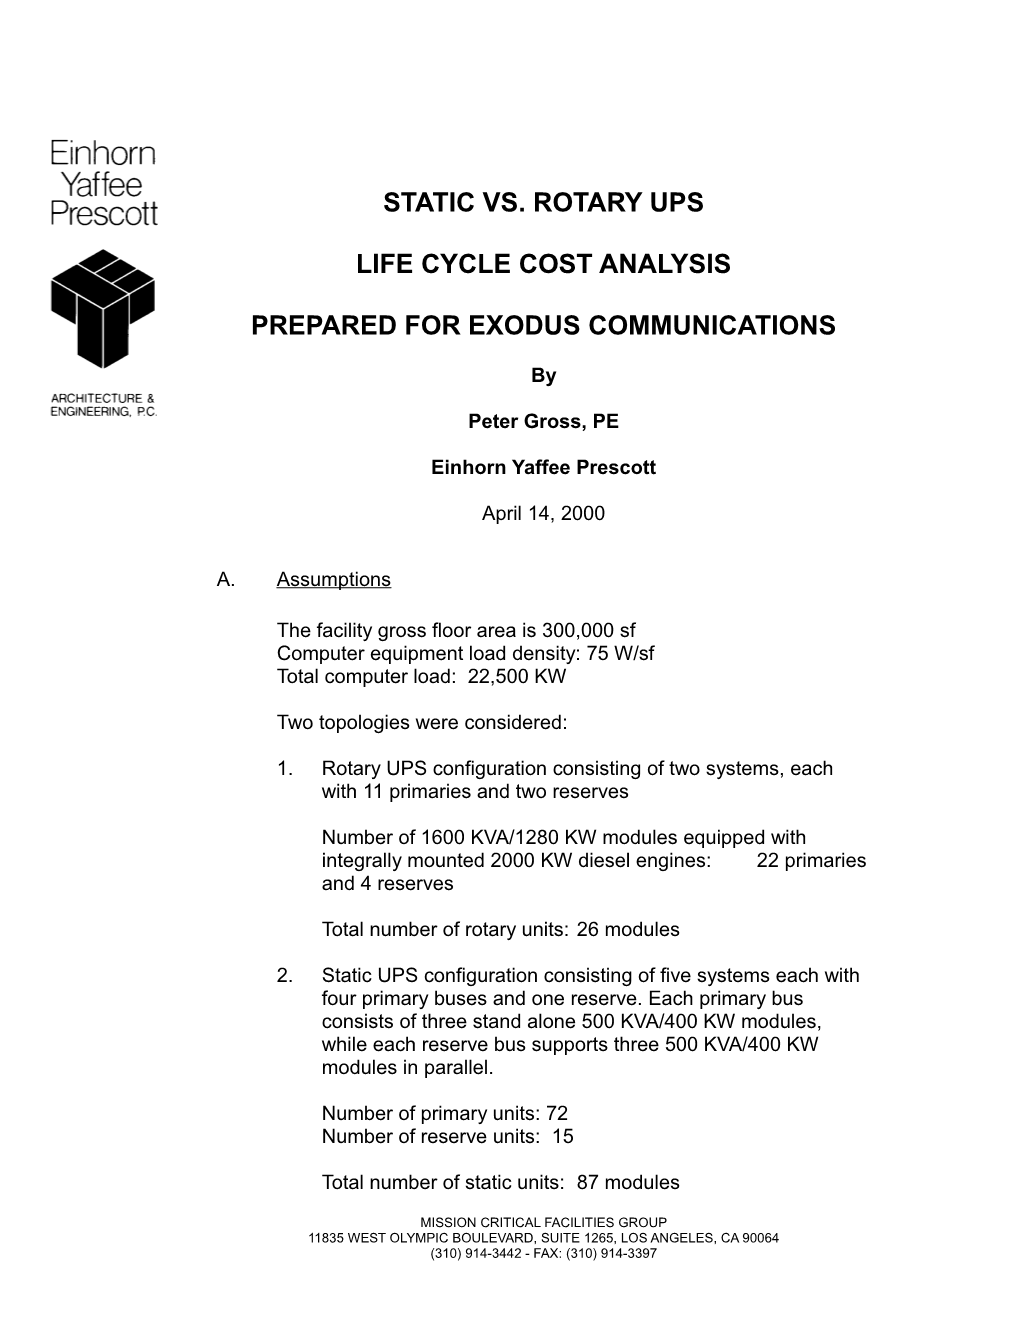 Rotary Vs. Static UPS Operating Costs Analysis